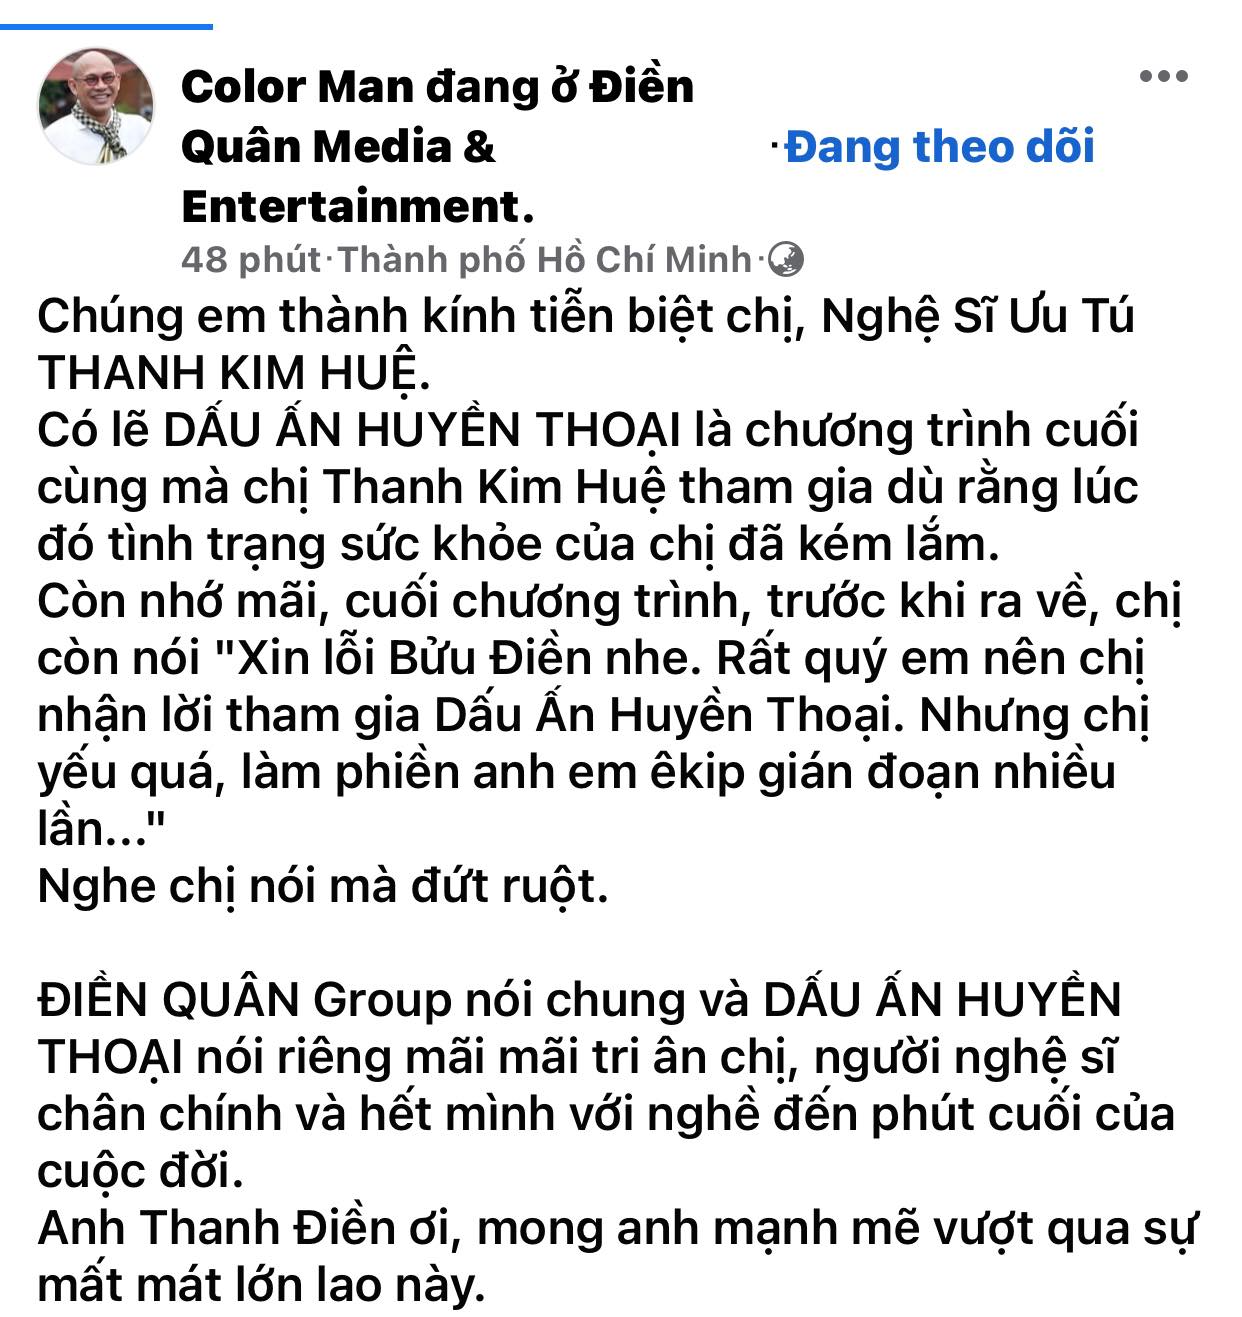 Dam-vinh-hung-xot-xa-nho-lai-loi-hua-dang-do-voi-co-nghe-si-thanh-kim-hue-cdm-vo-cung-tiec-thuong-5